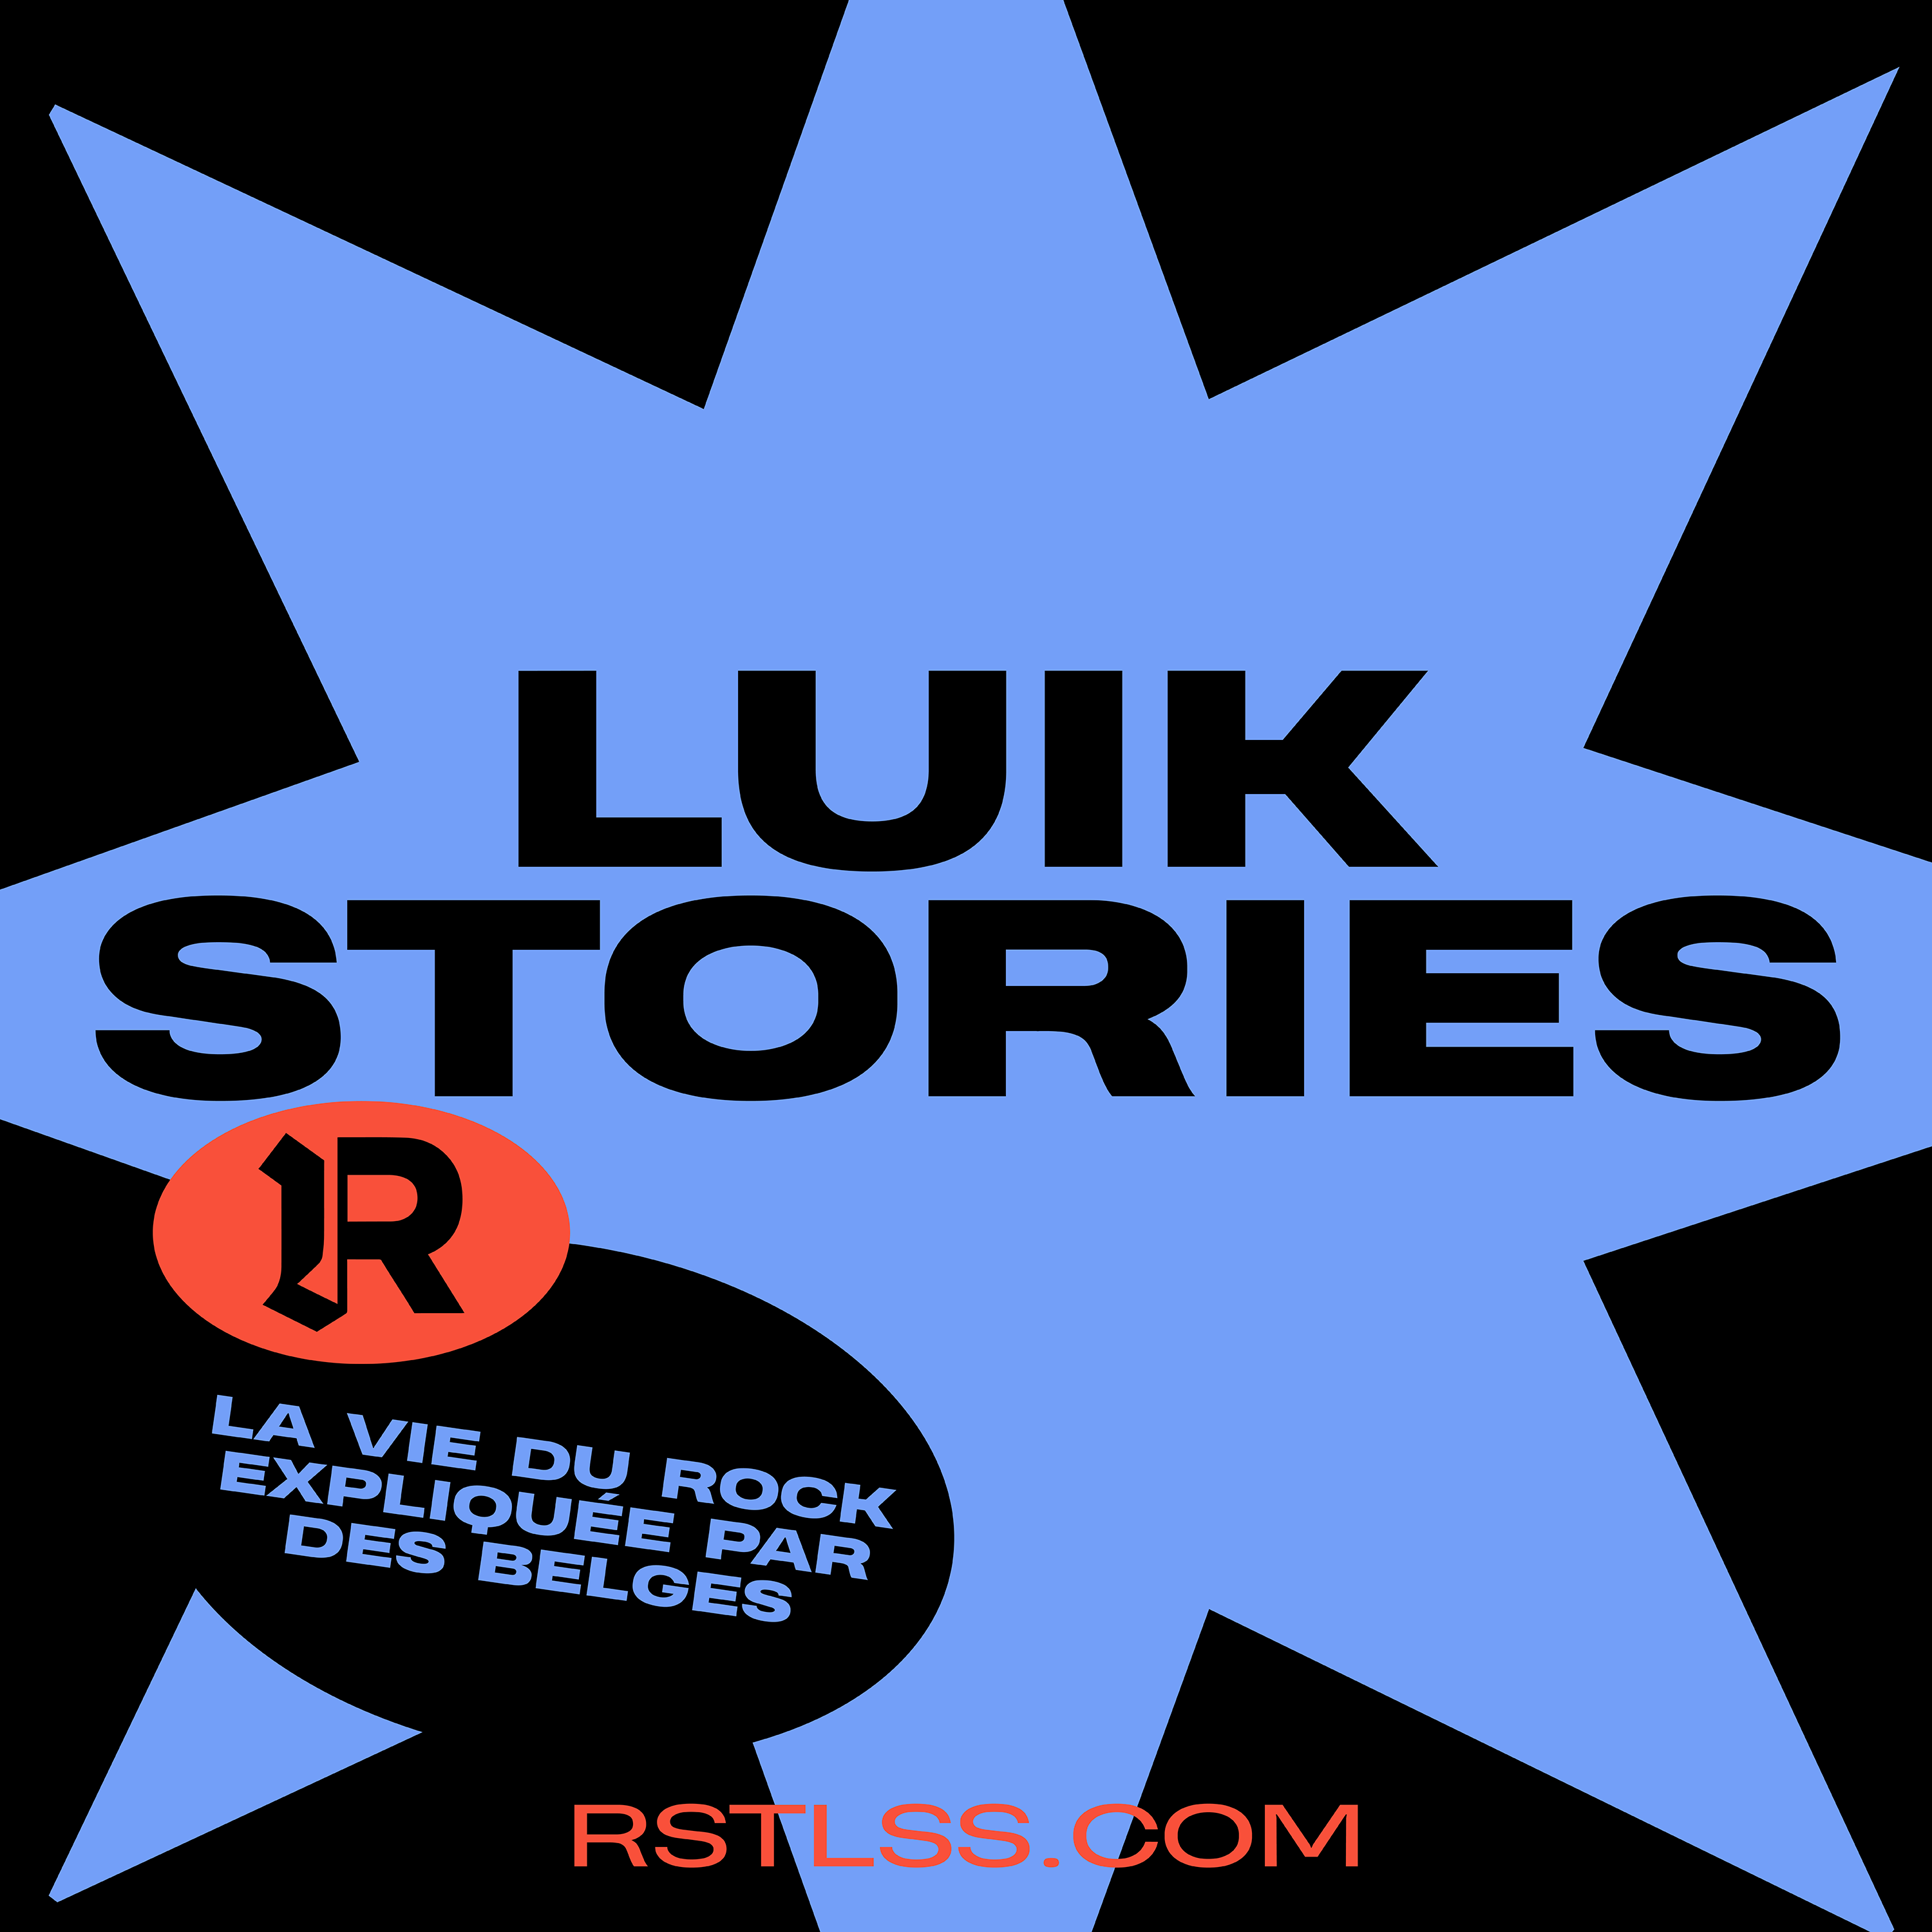 LUIK STORIES #3 – Yannick de Cocaine Piss & Jaune Orange